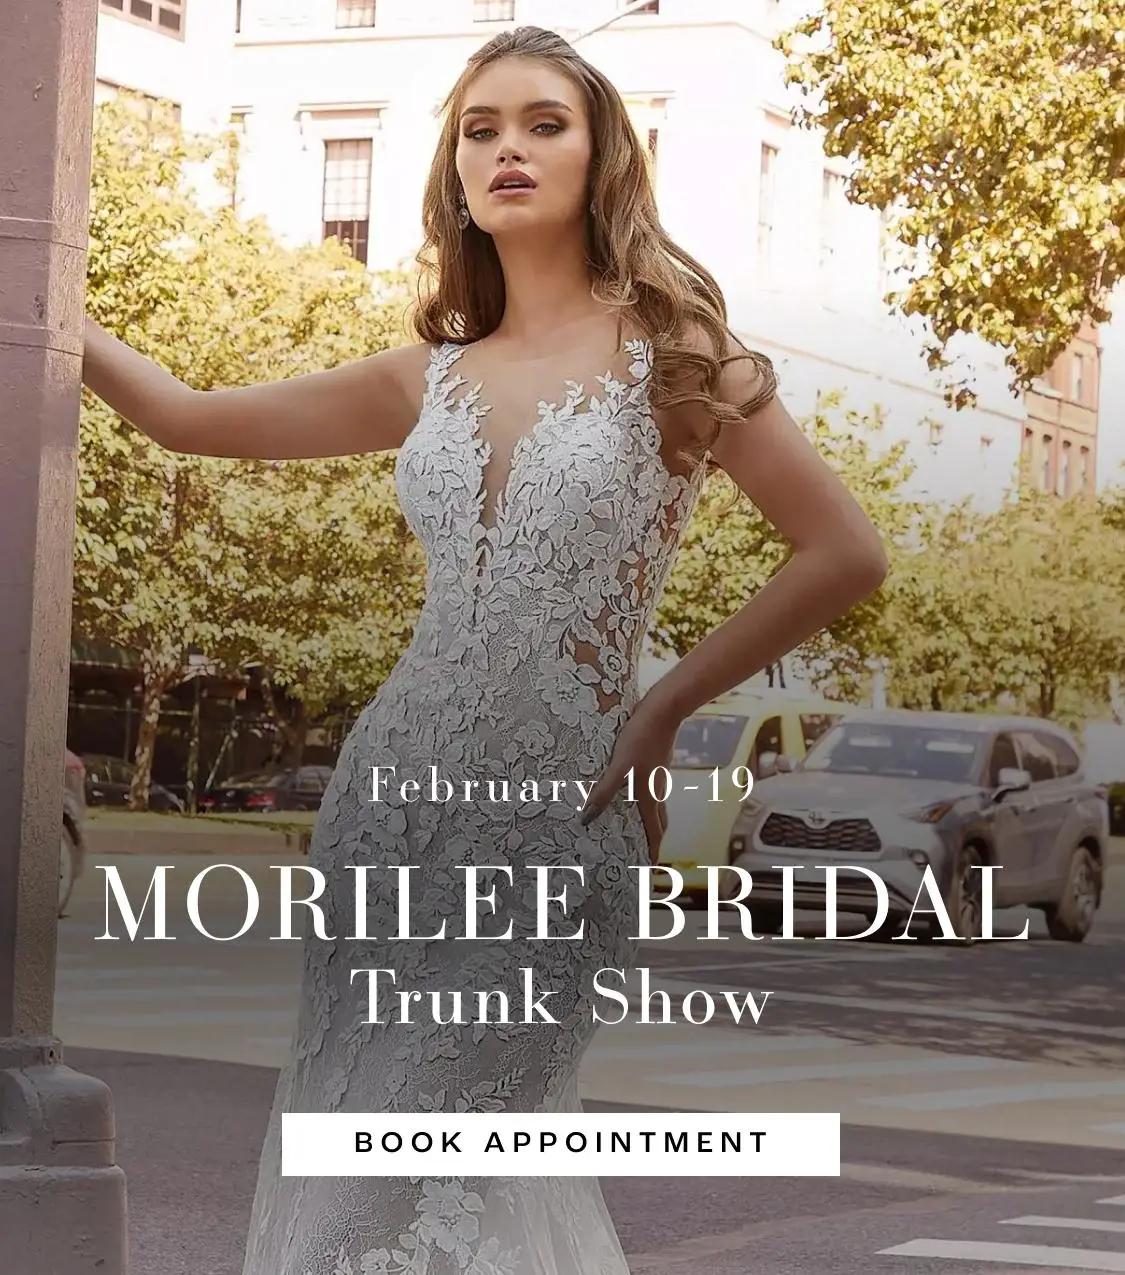 "Morilee Bridal Trunk Show" banner for mobile